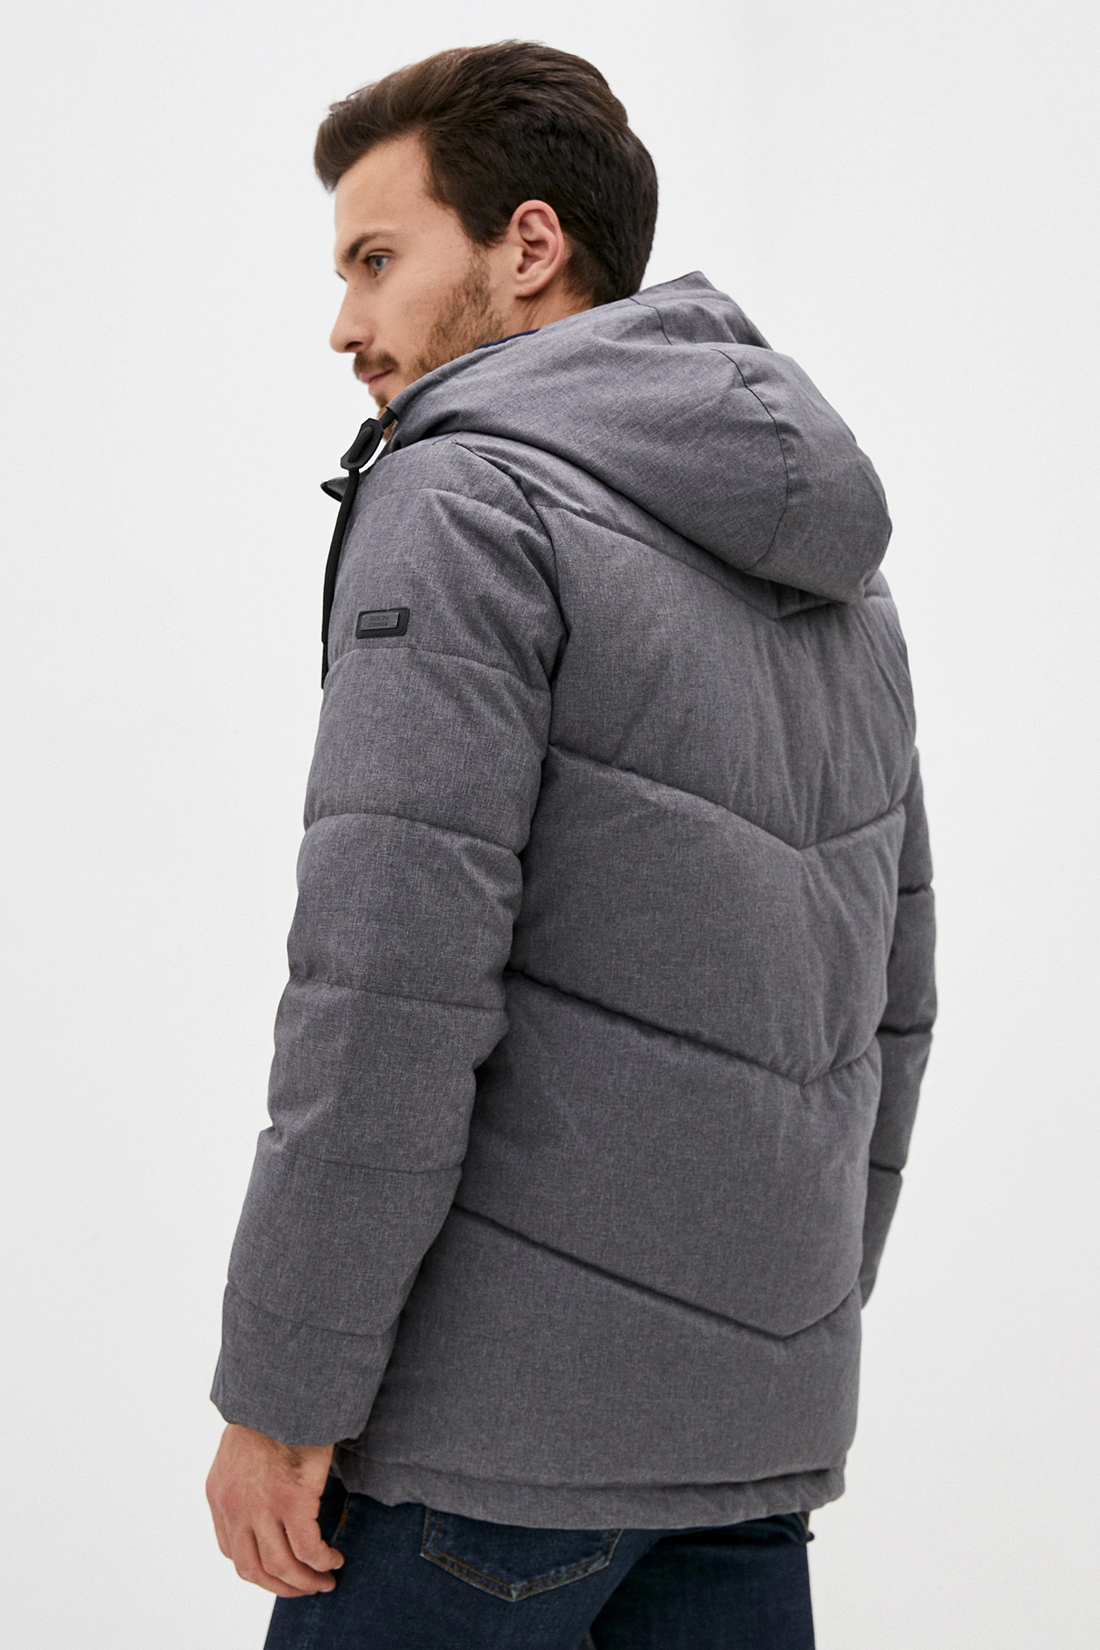 Куртка (Эко пух) (арт. baon B540508), размер XL, цвет deep grey melange#серый Куртка (Эко пух) (арт. baon B540508) - фото 2